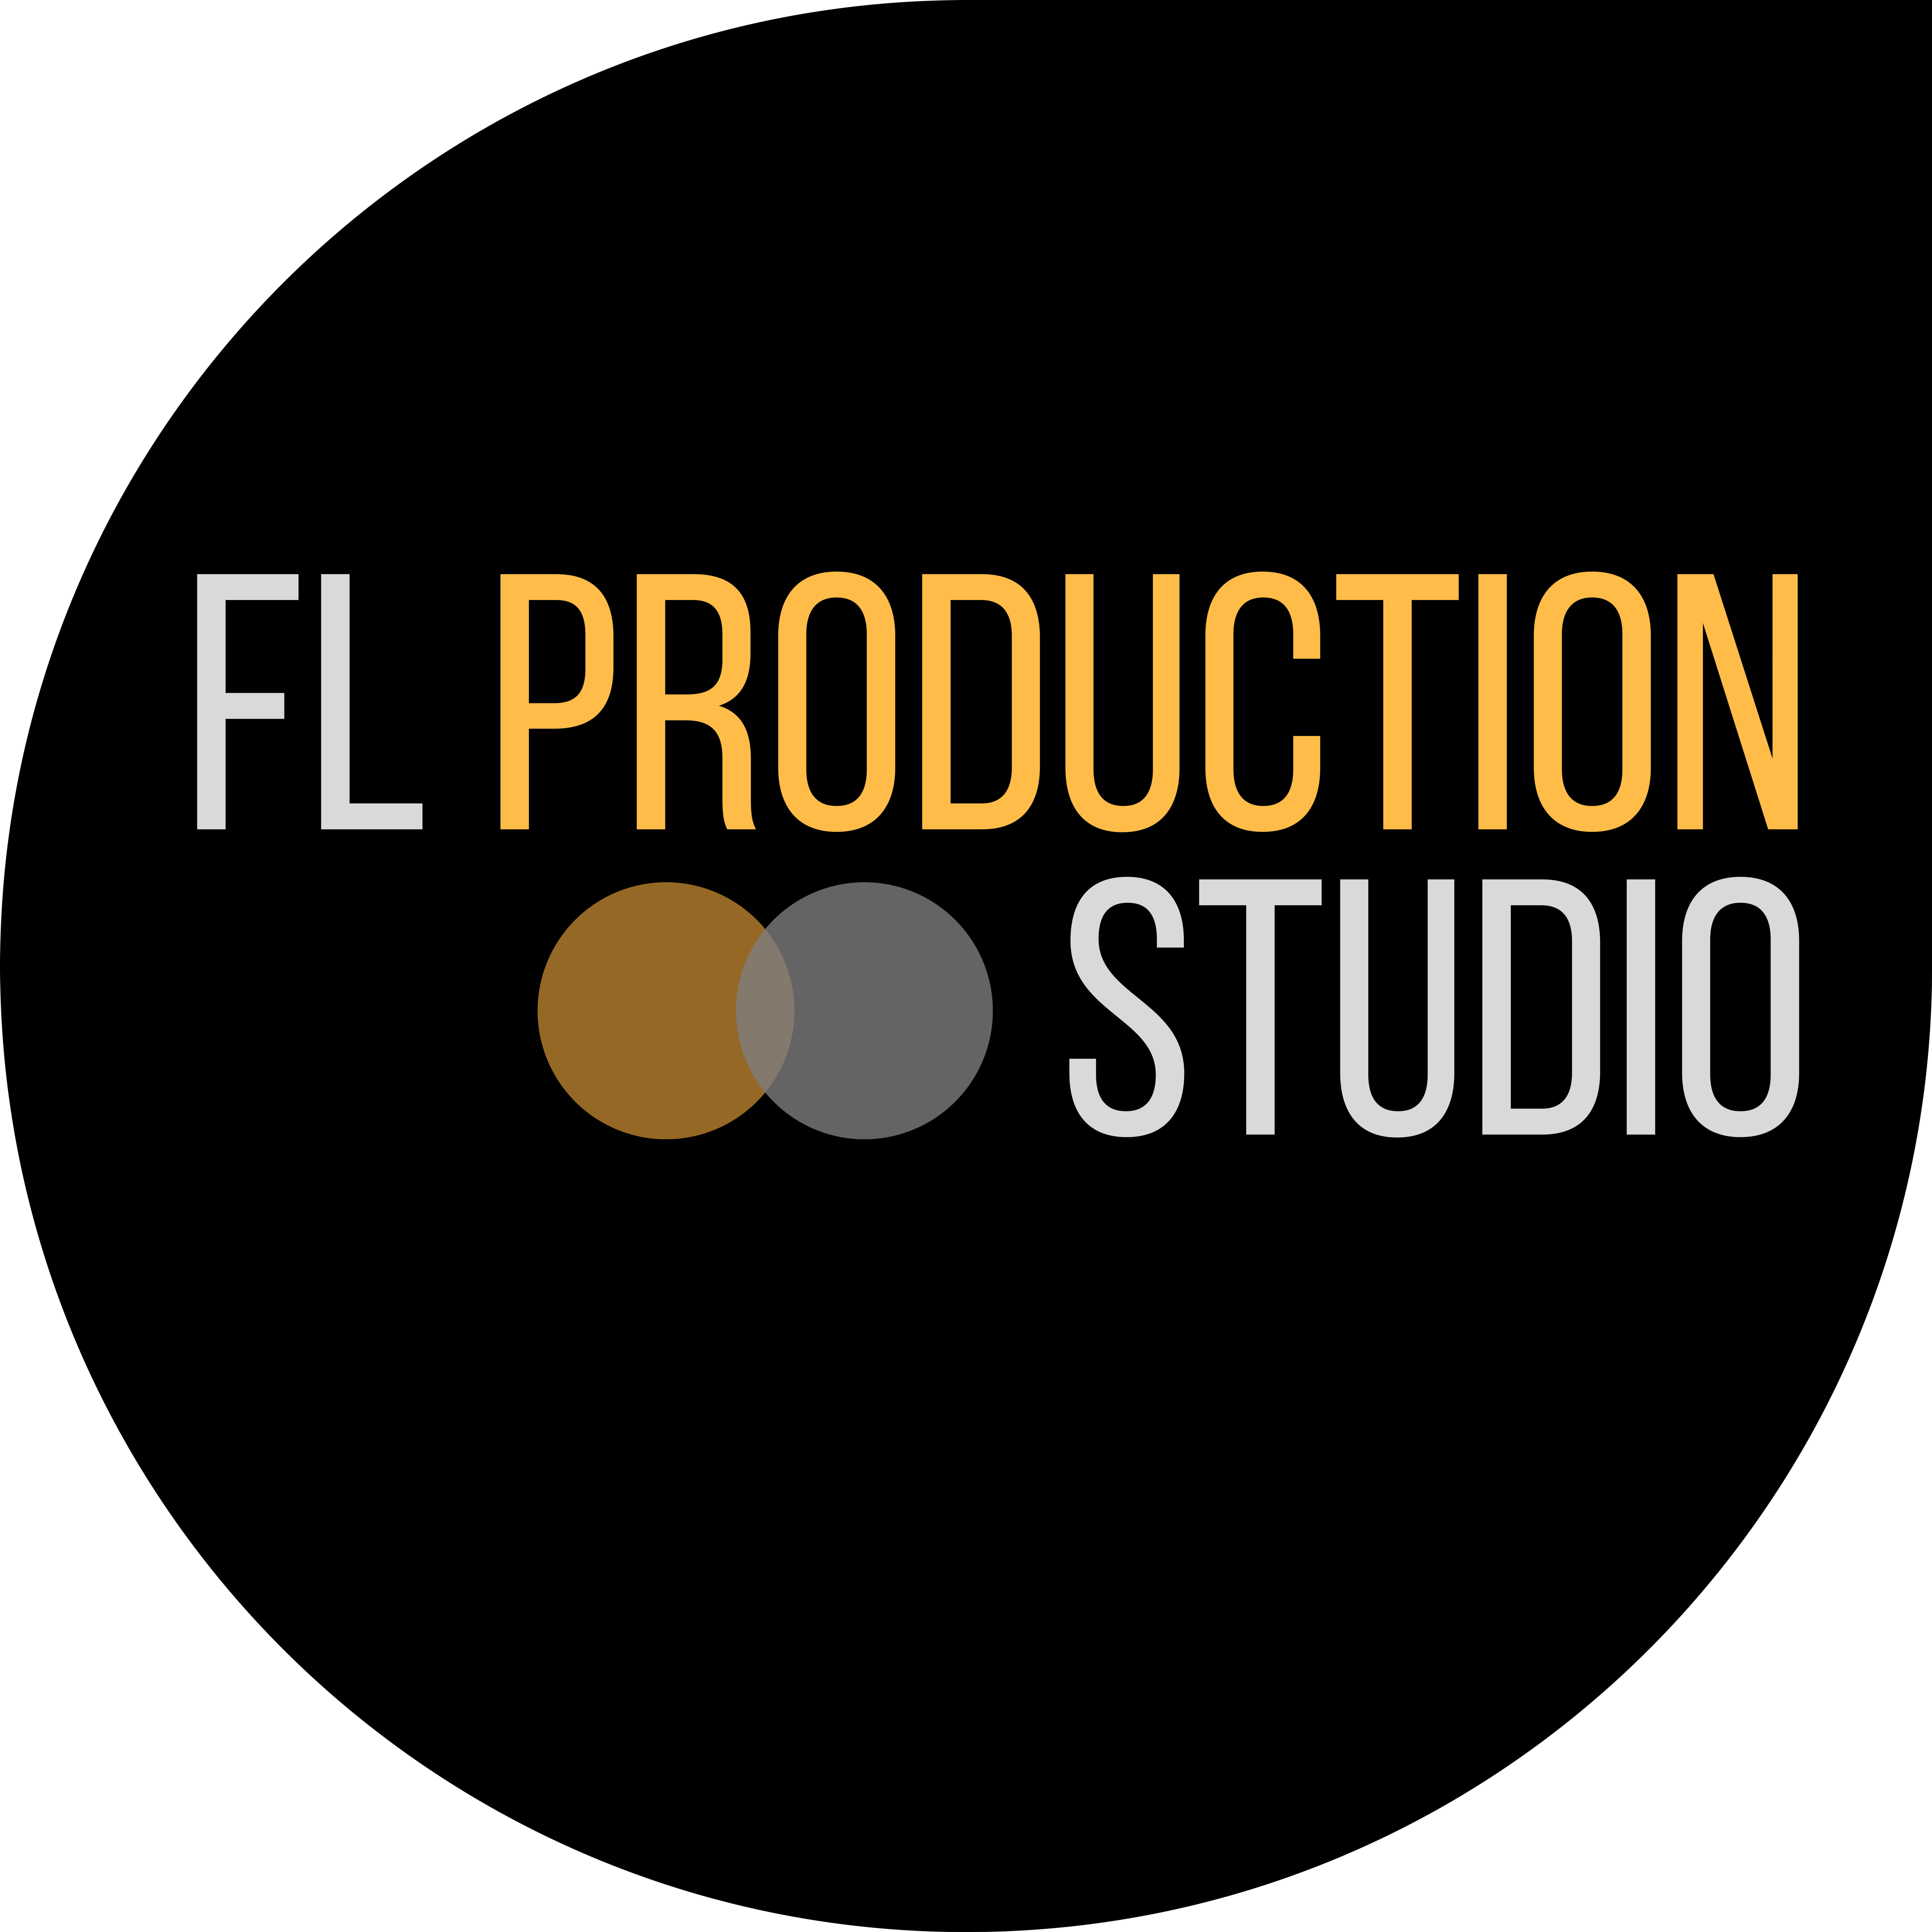 FL PRODUCTION STUDIO 